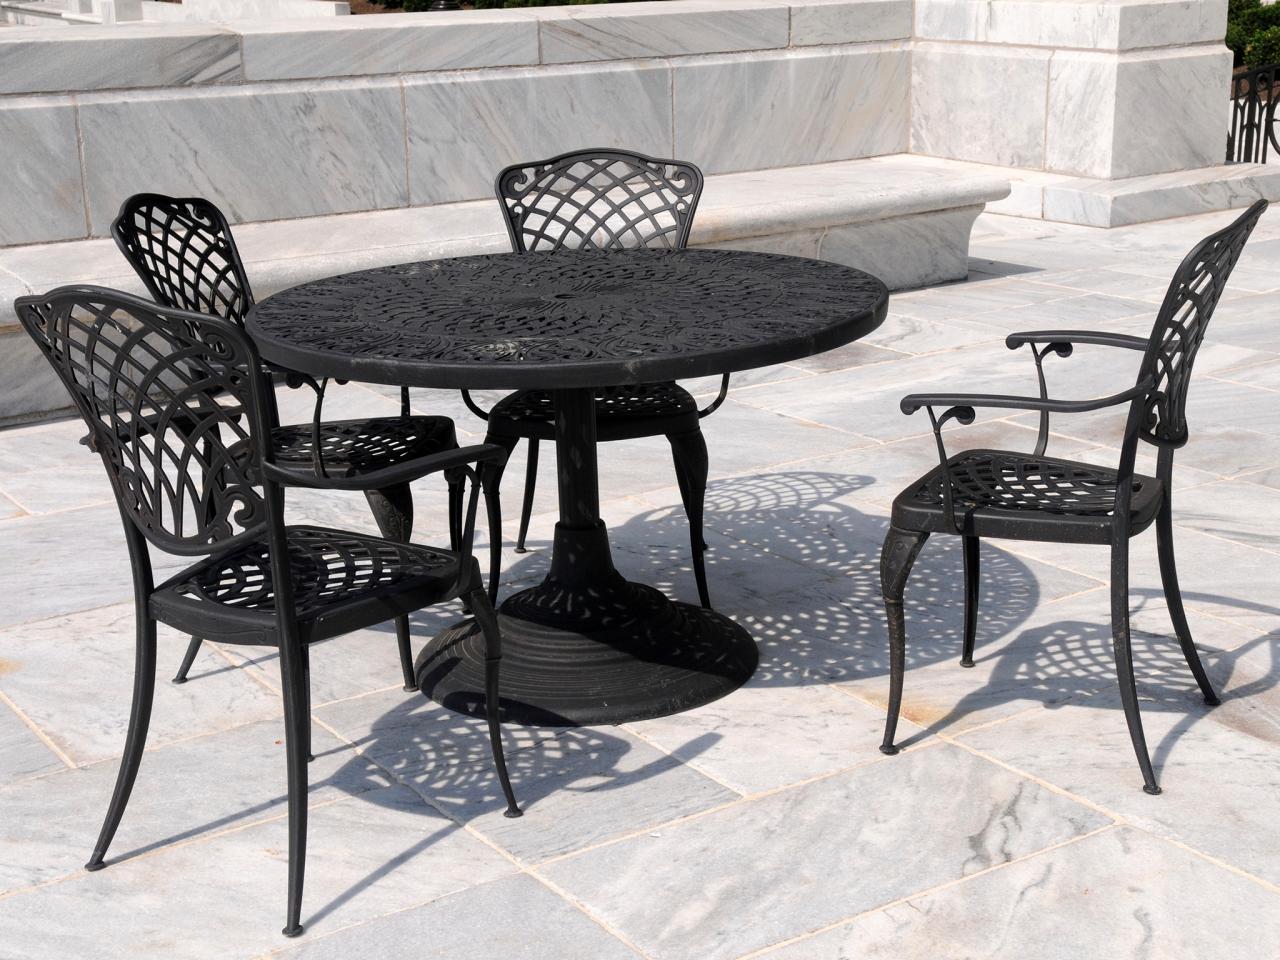 Tips for identifying cast iron rattan garden furniture